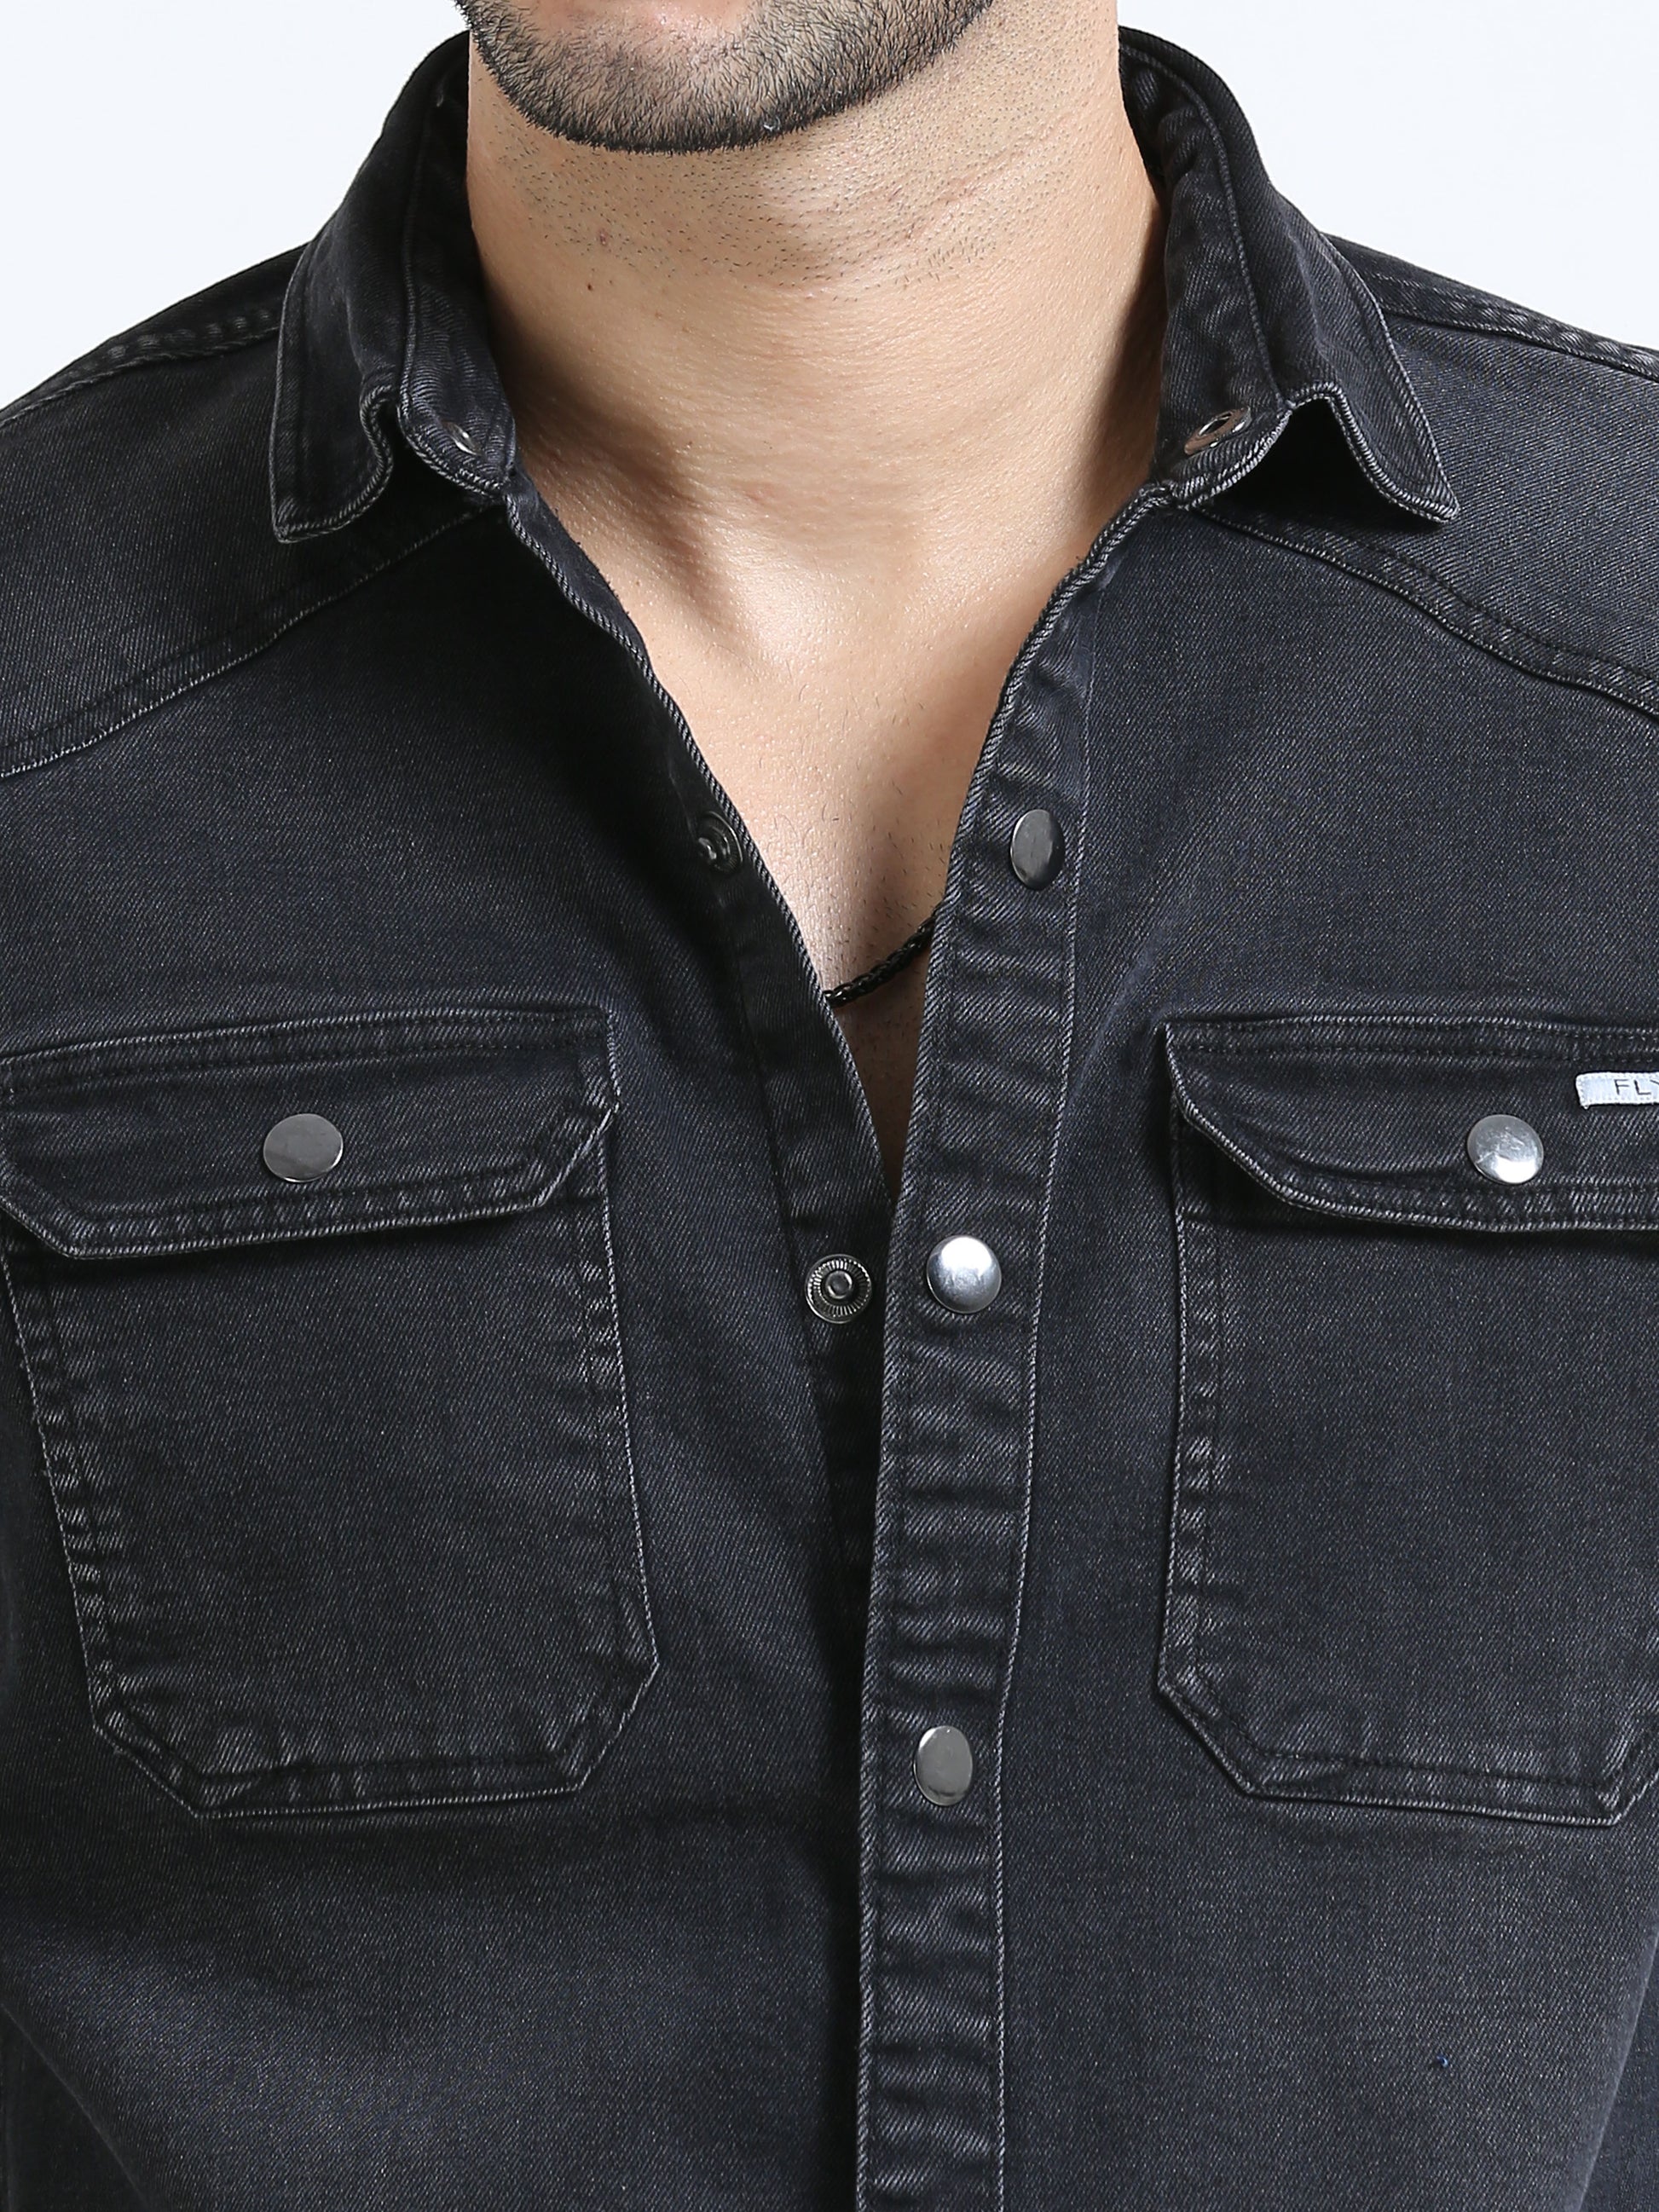 Vuclan black double pocket shirts denim for men